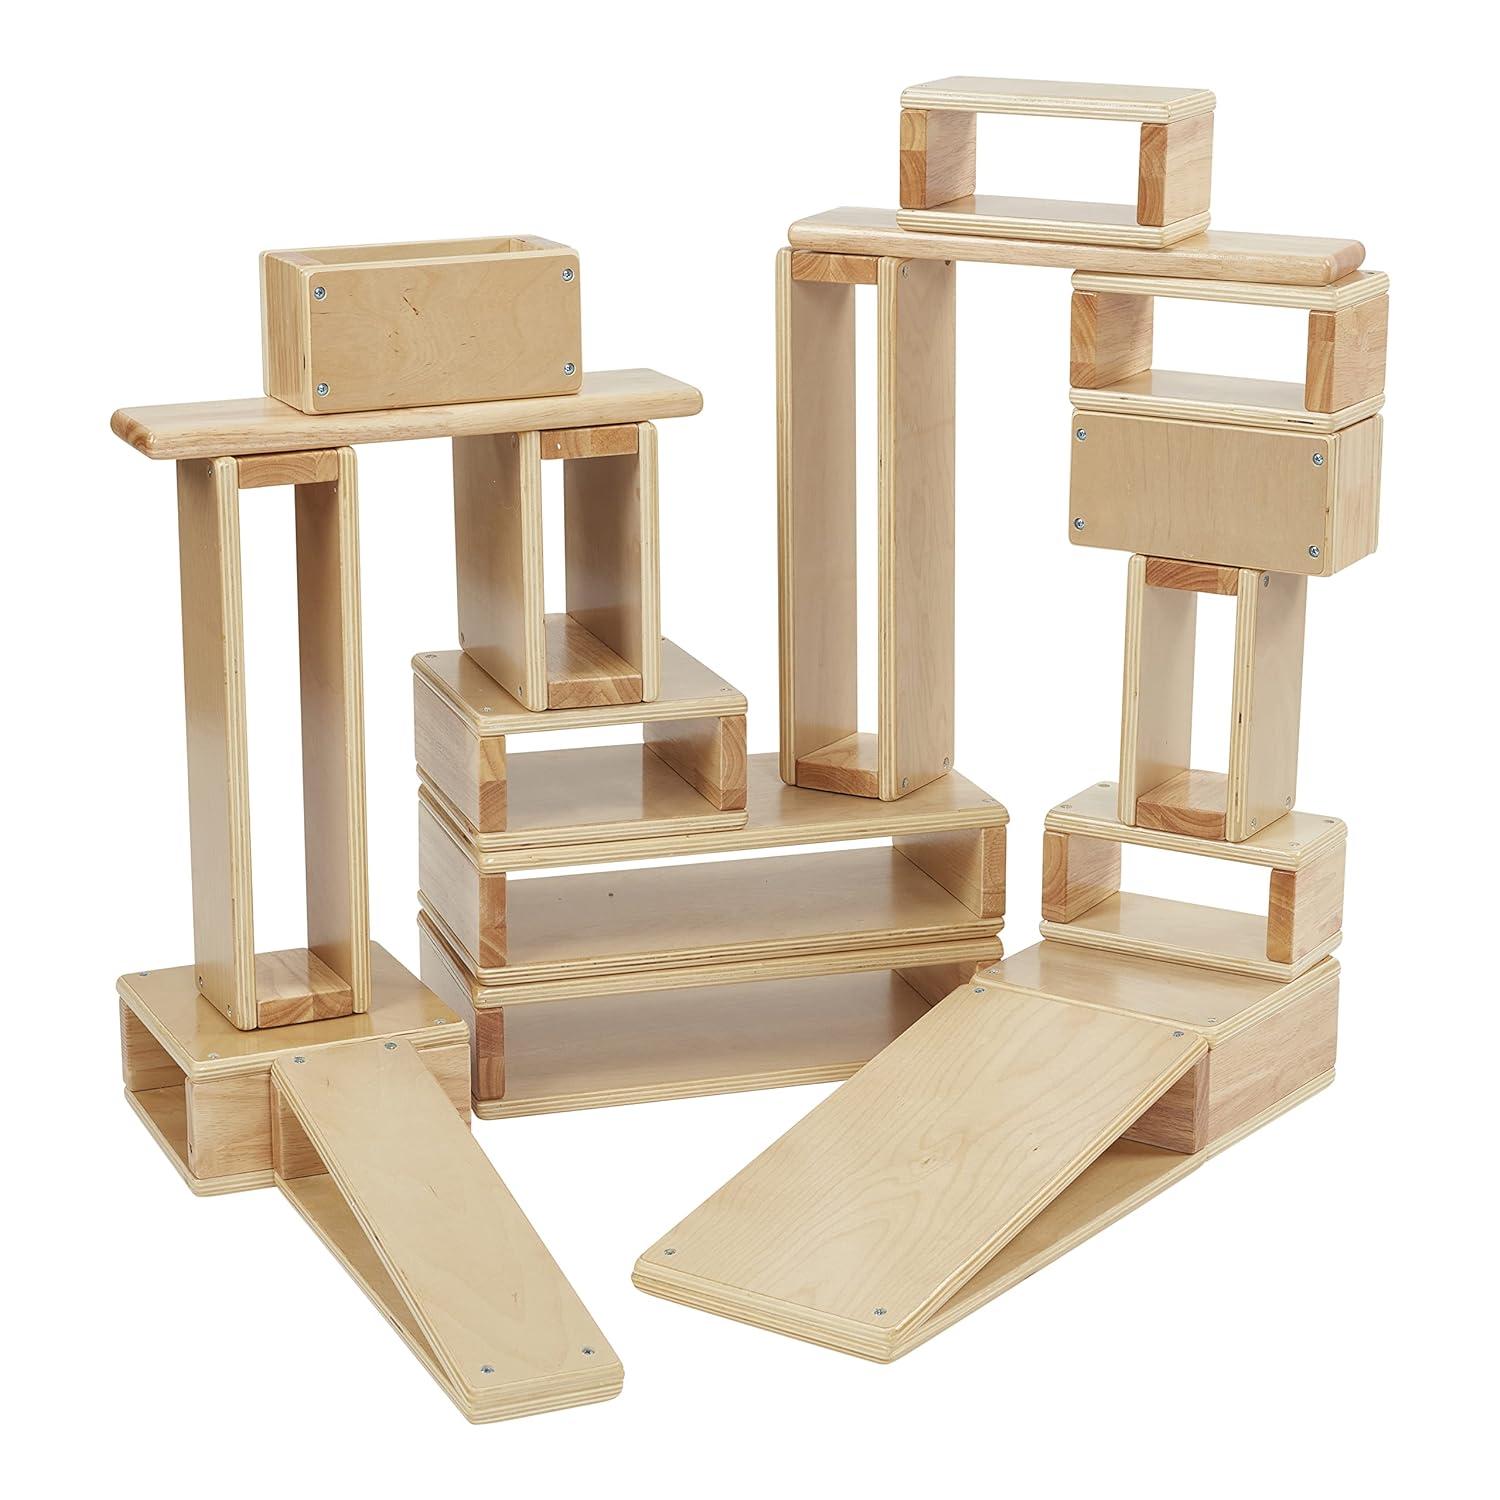 Montessori ECR4Kids Hollow Block Set 18-Piece